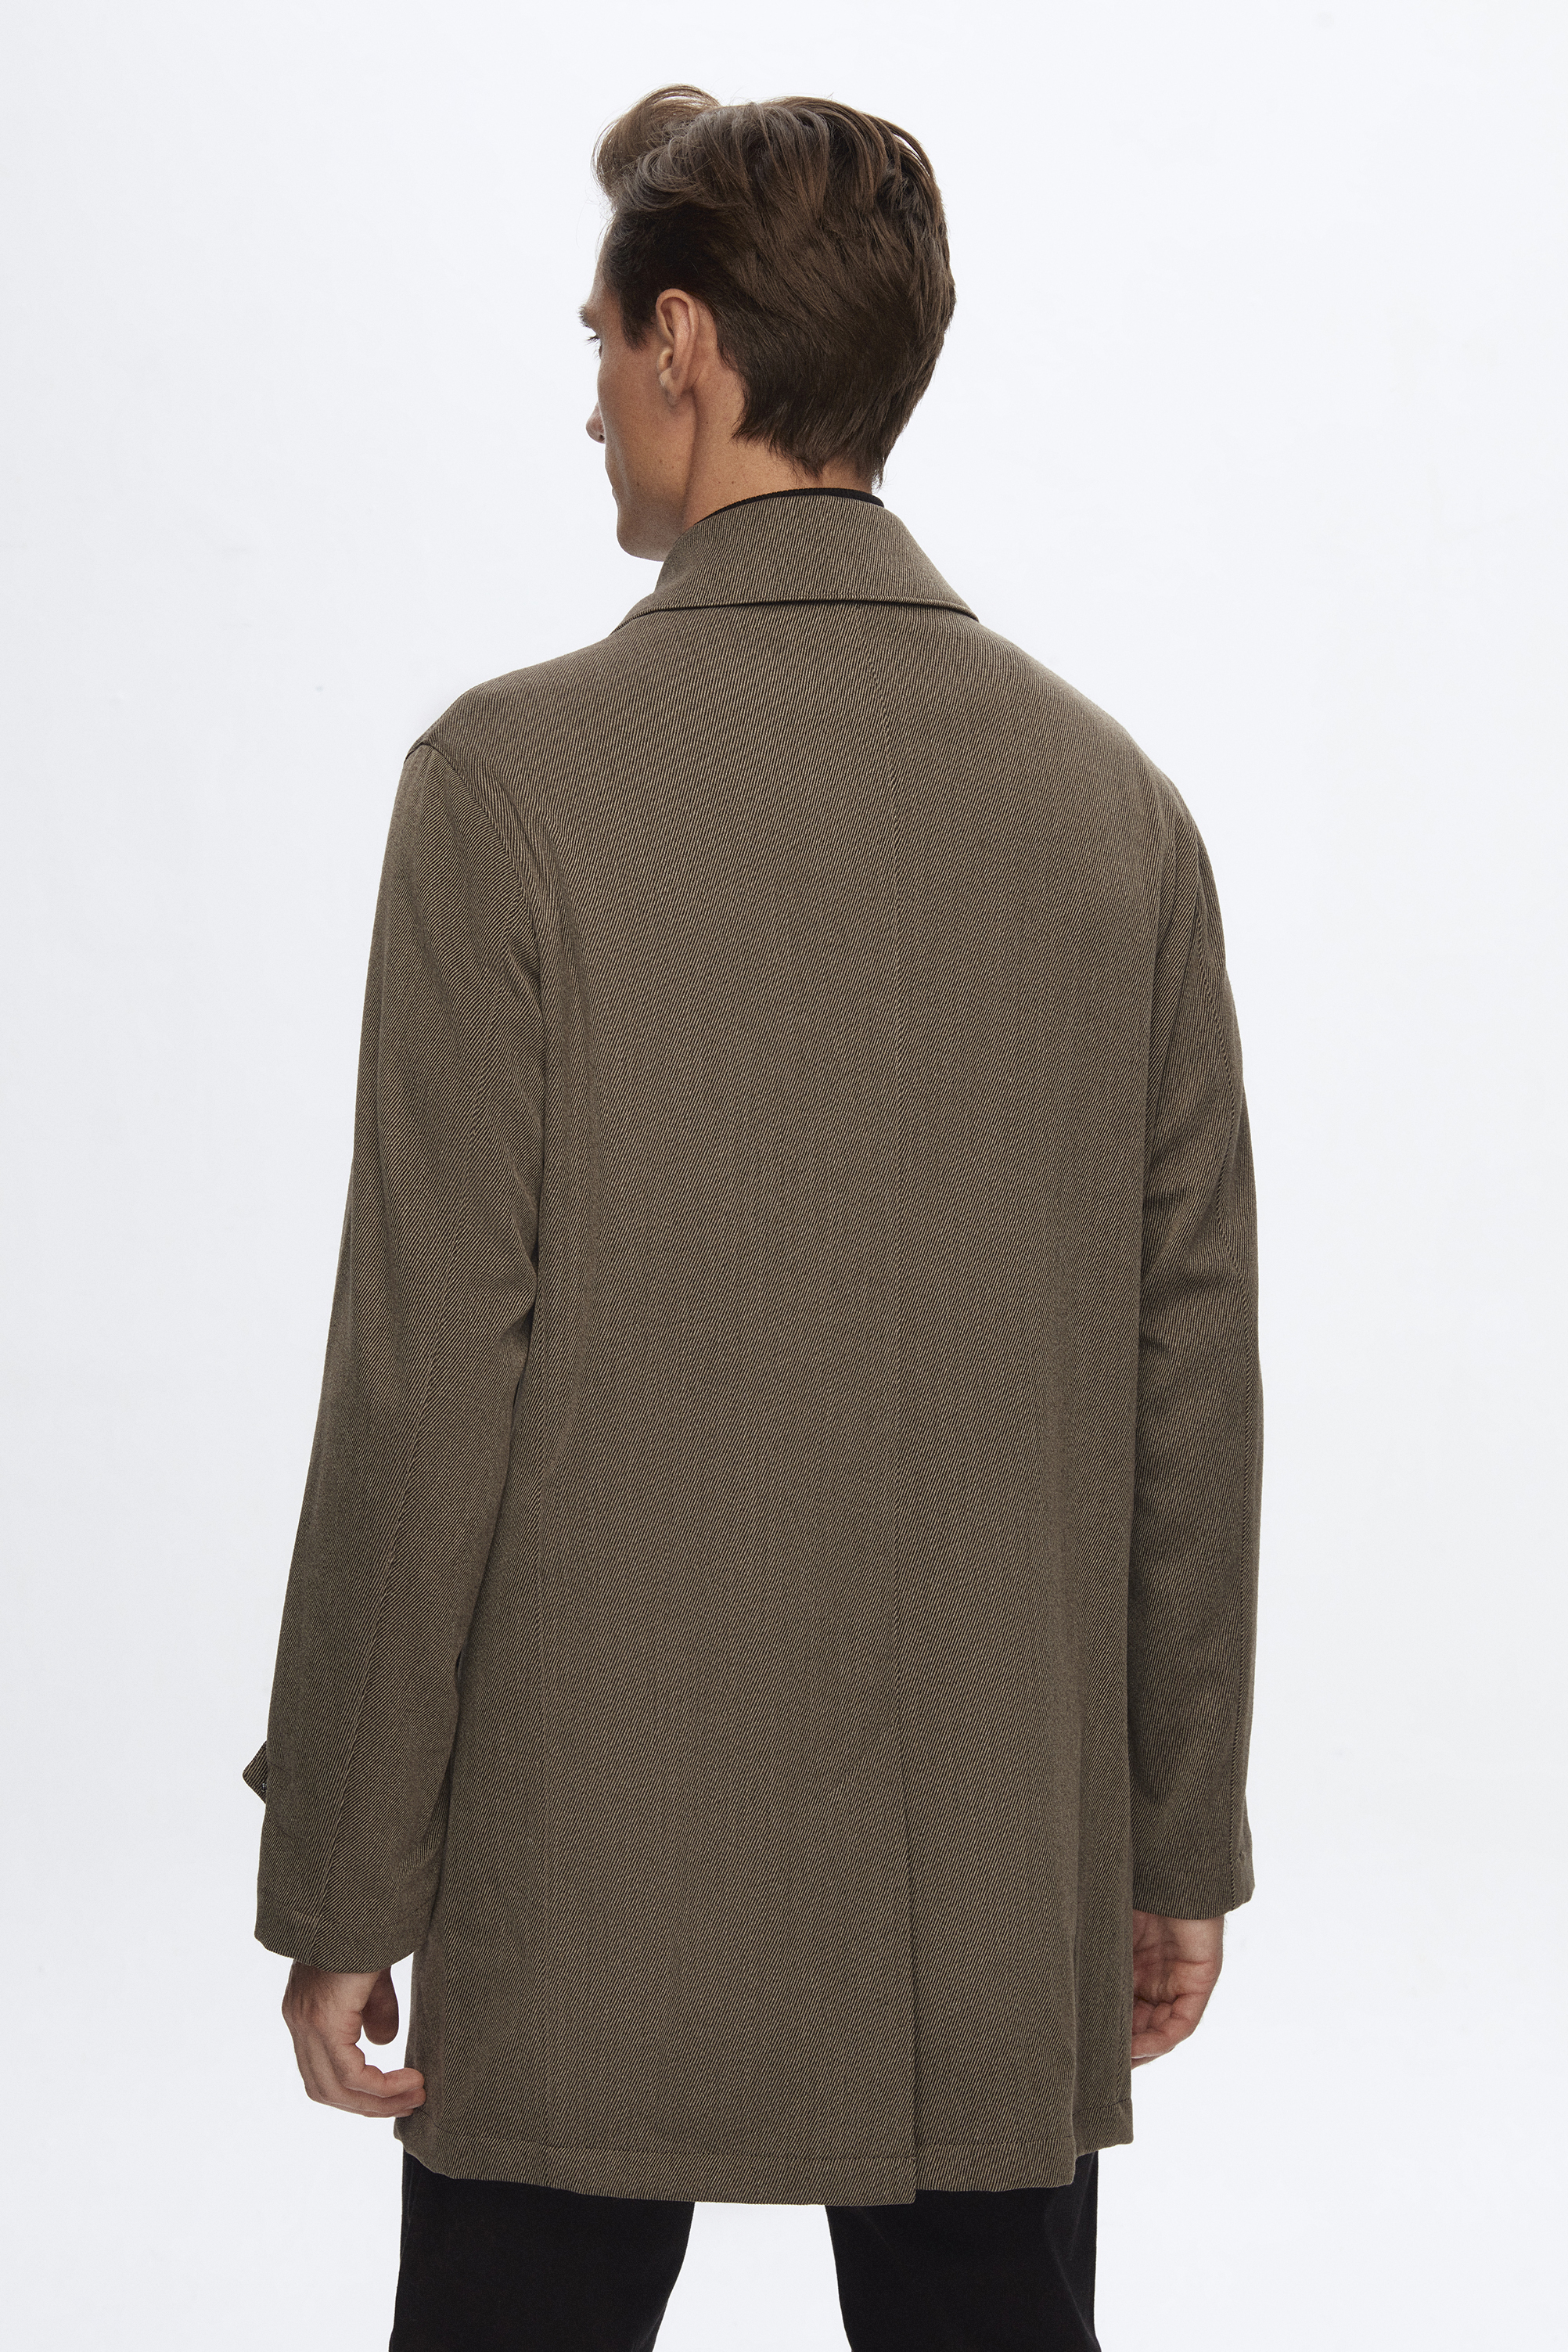 Damat Tween Damat Regular Fit Kahverengi Palto. 4